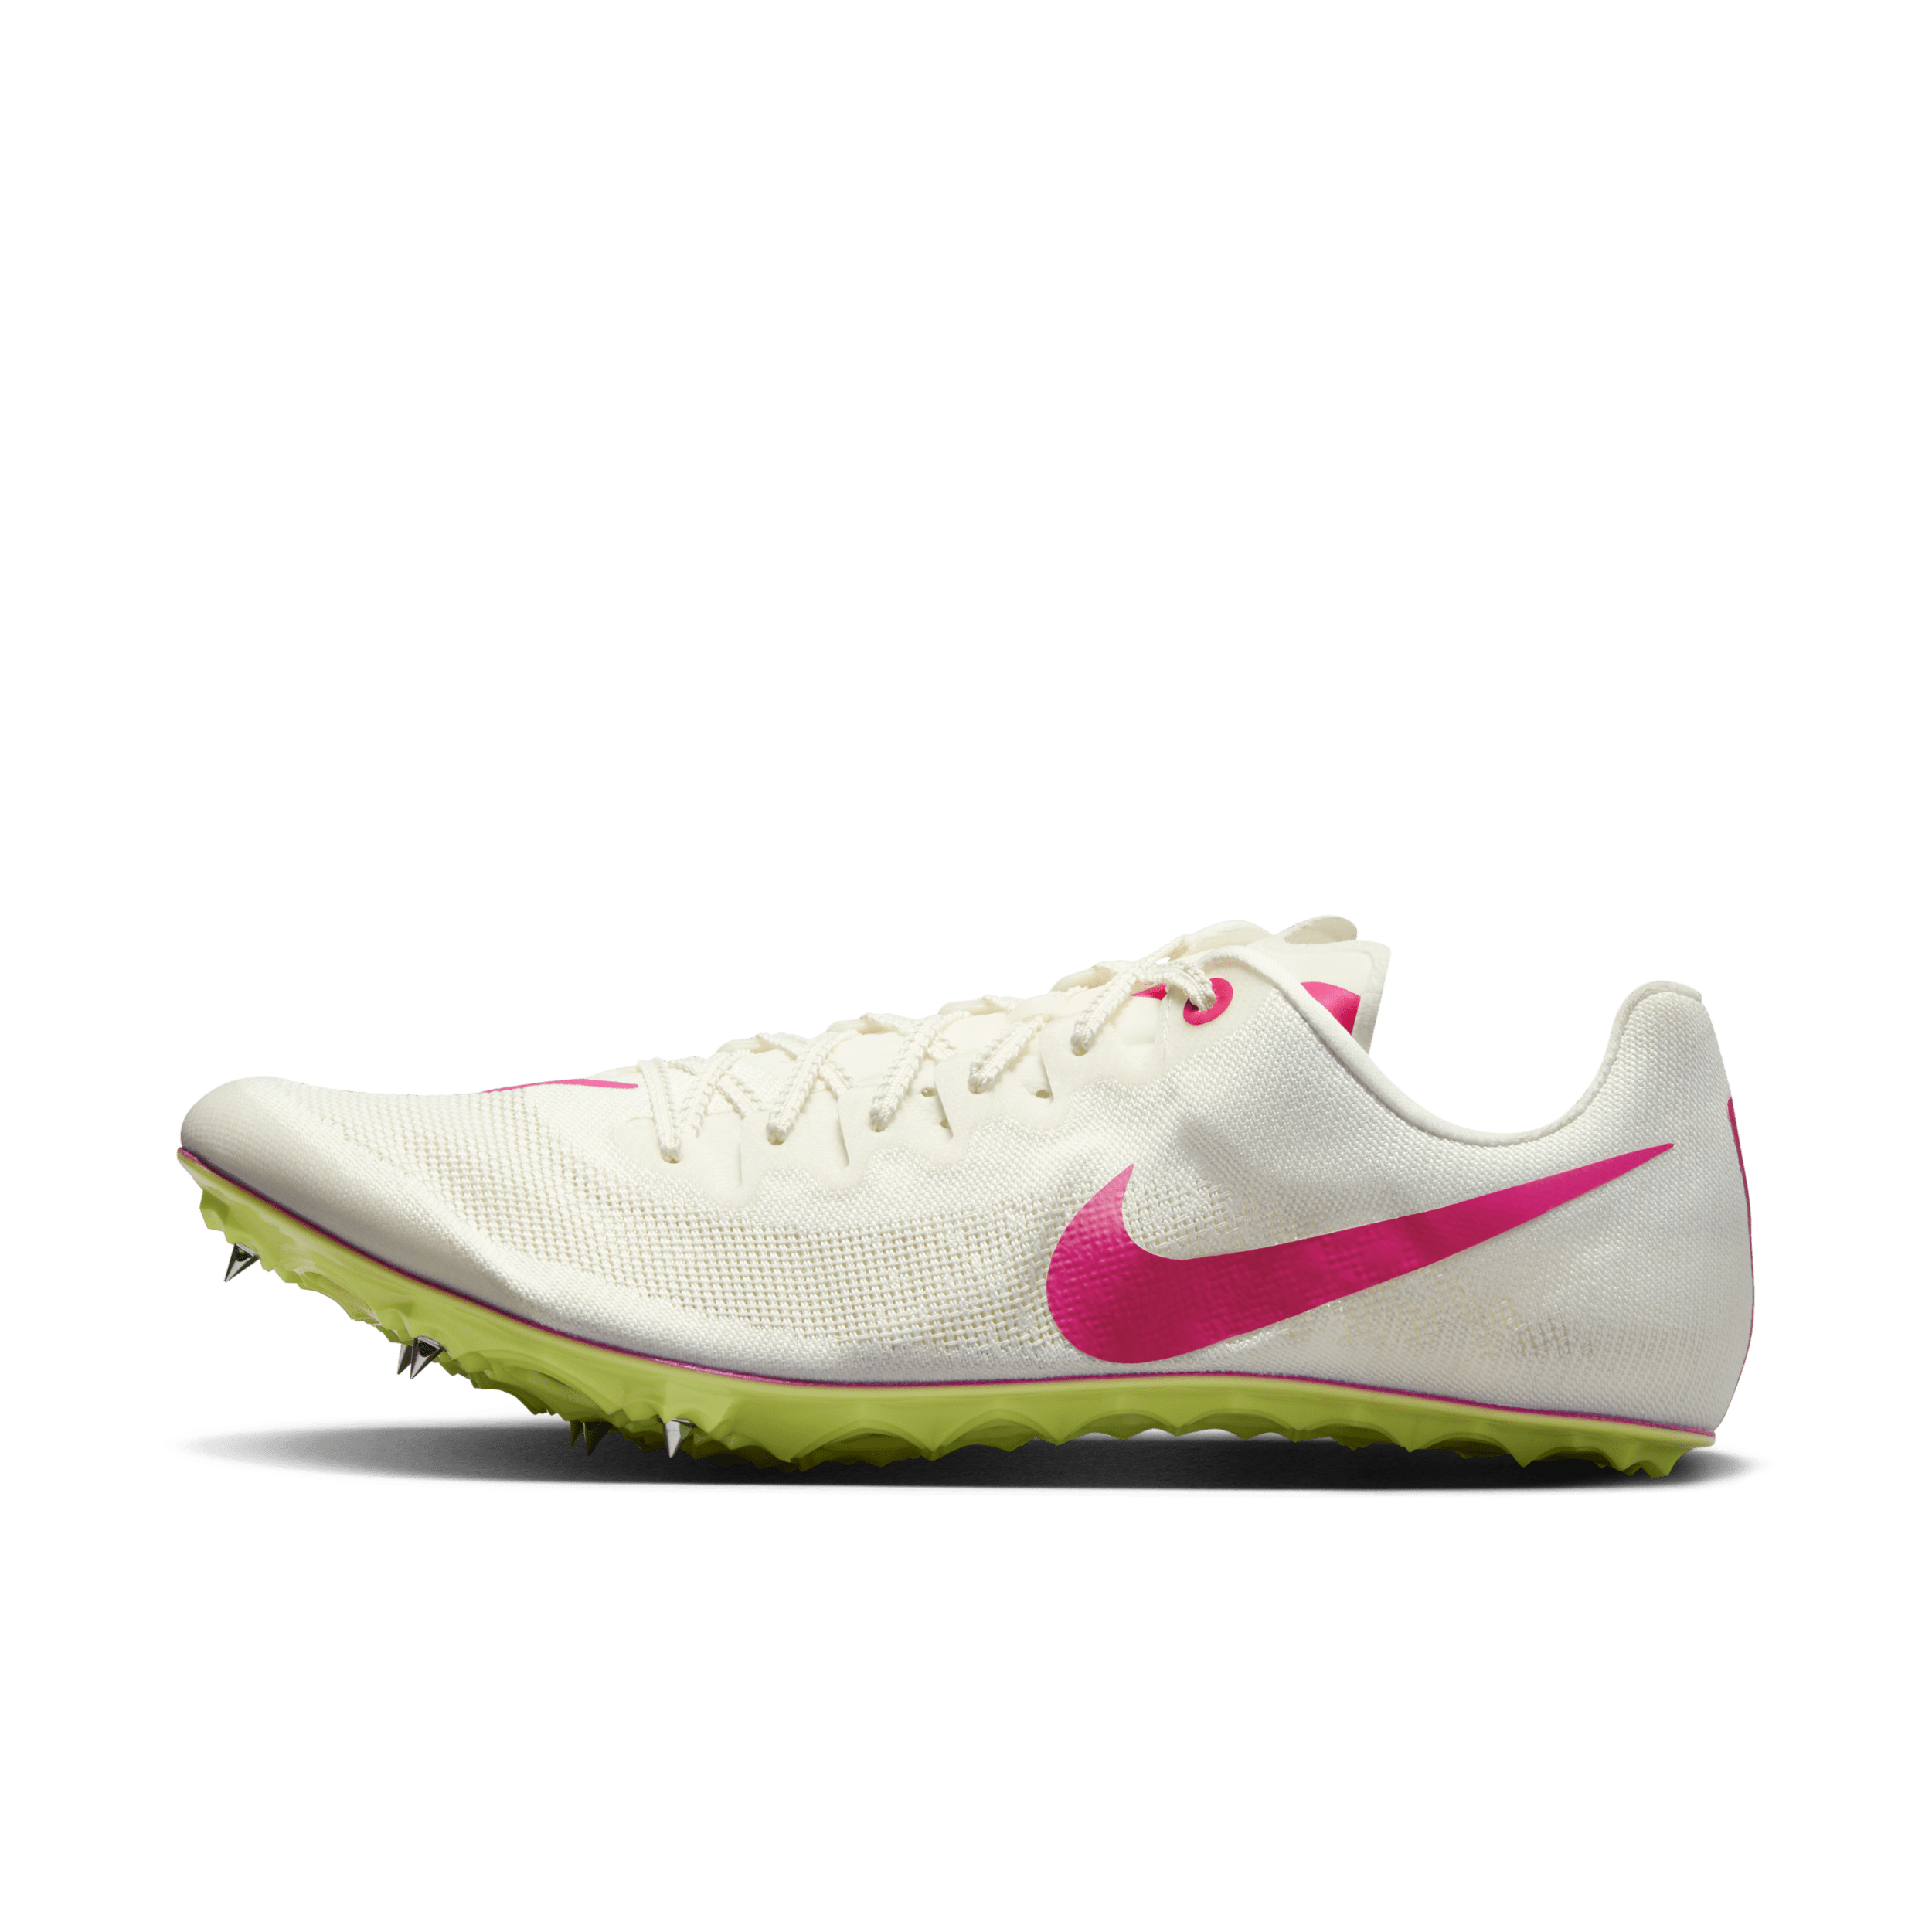 Nike Ja Fly 4 Athletics Sprinting Spikes - White